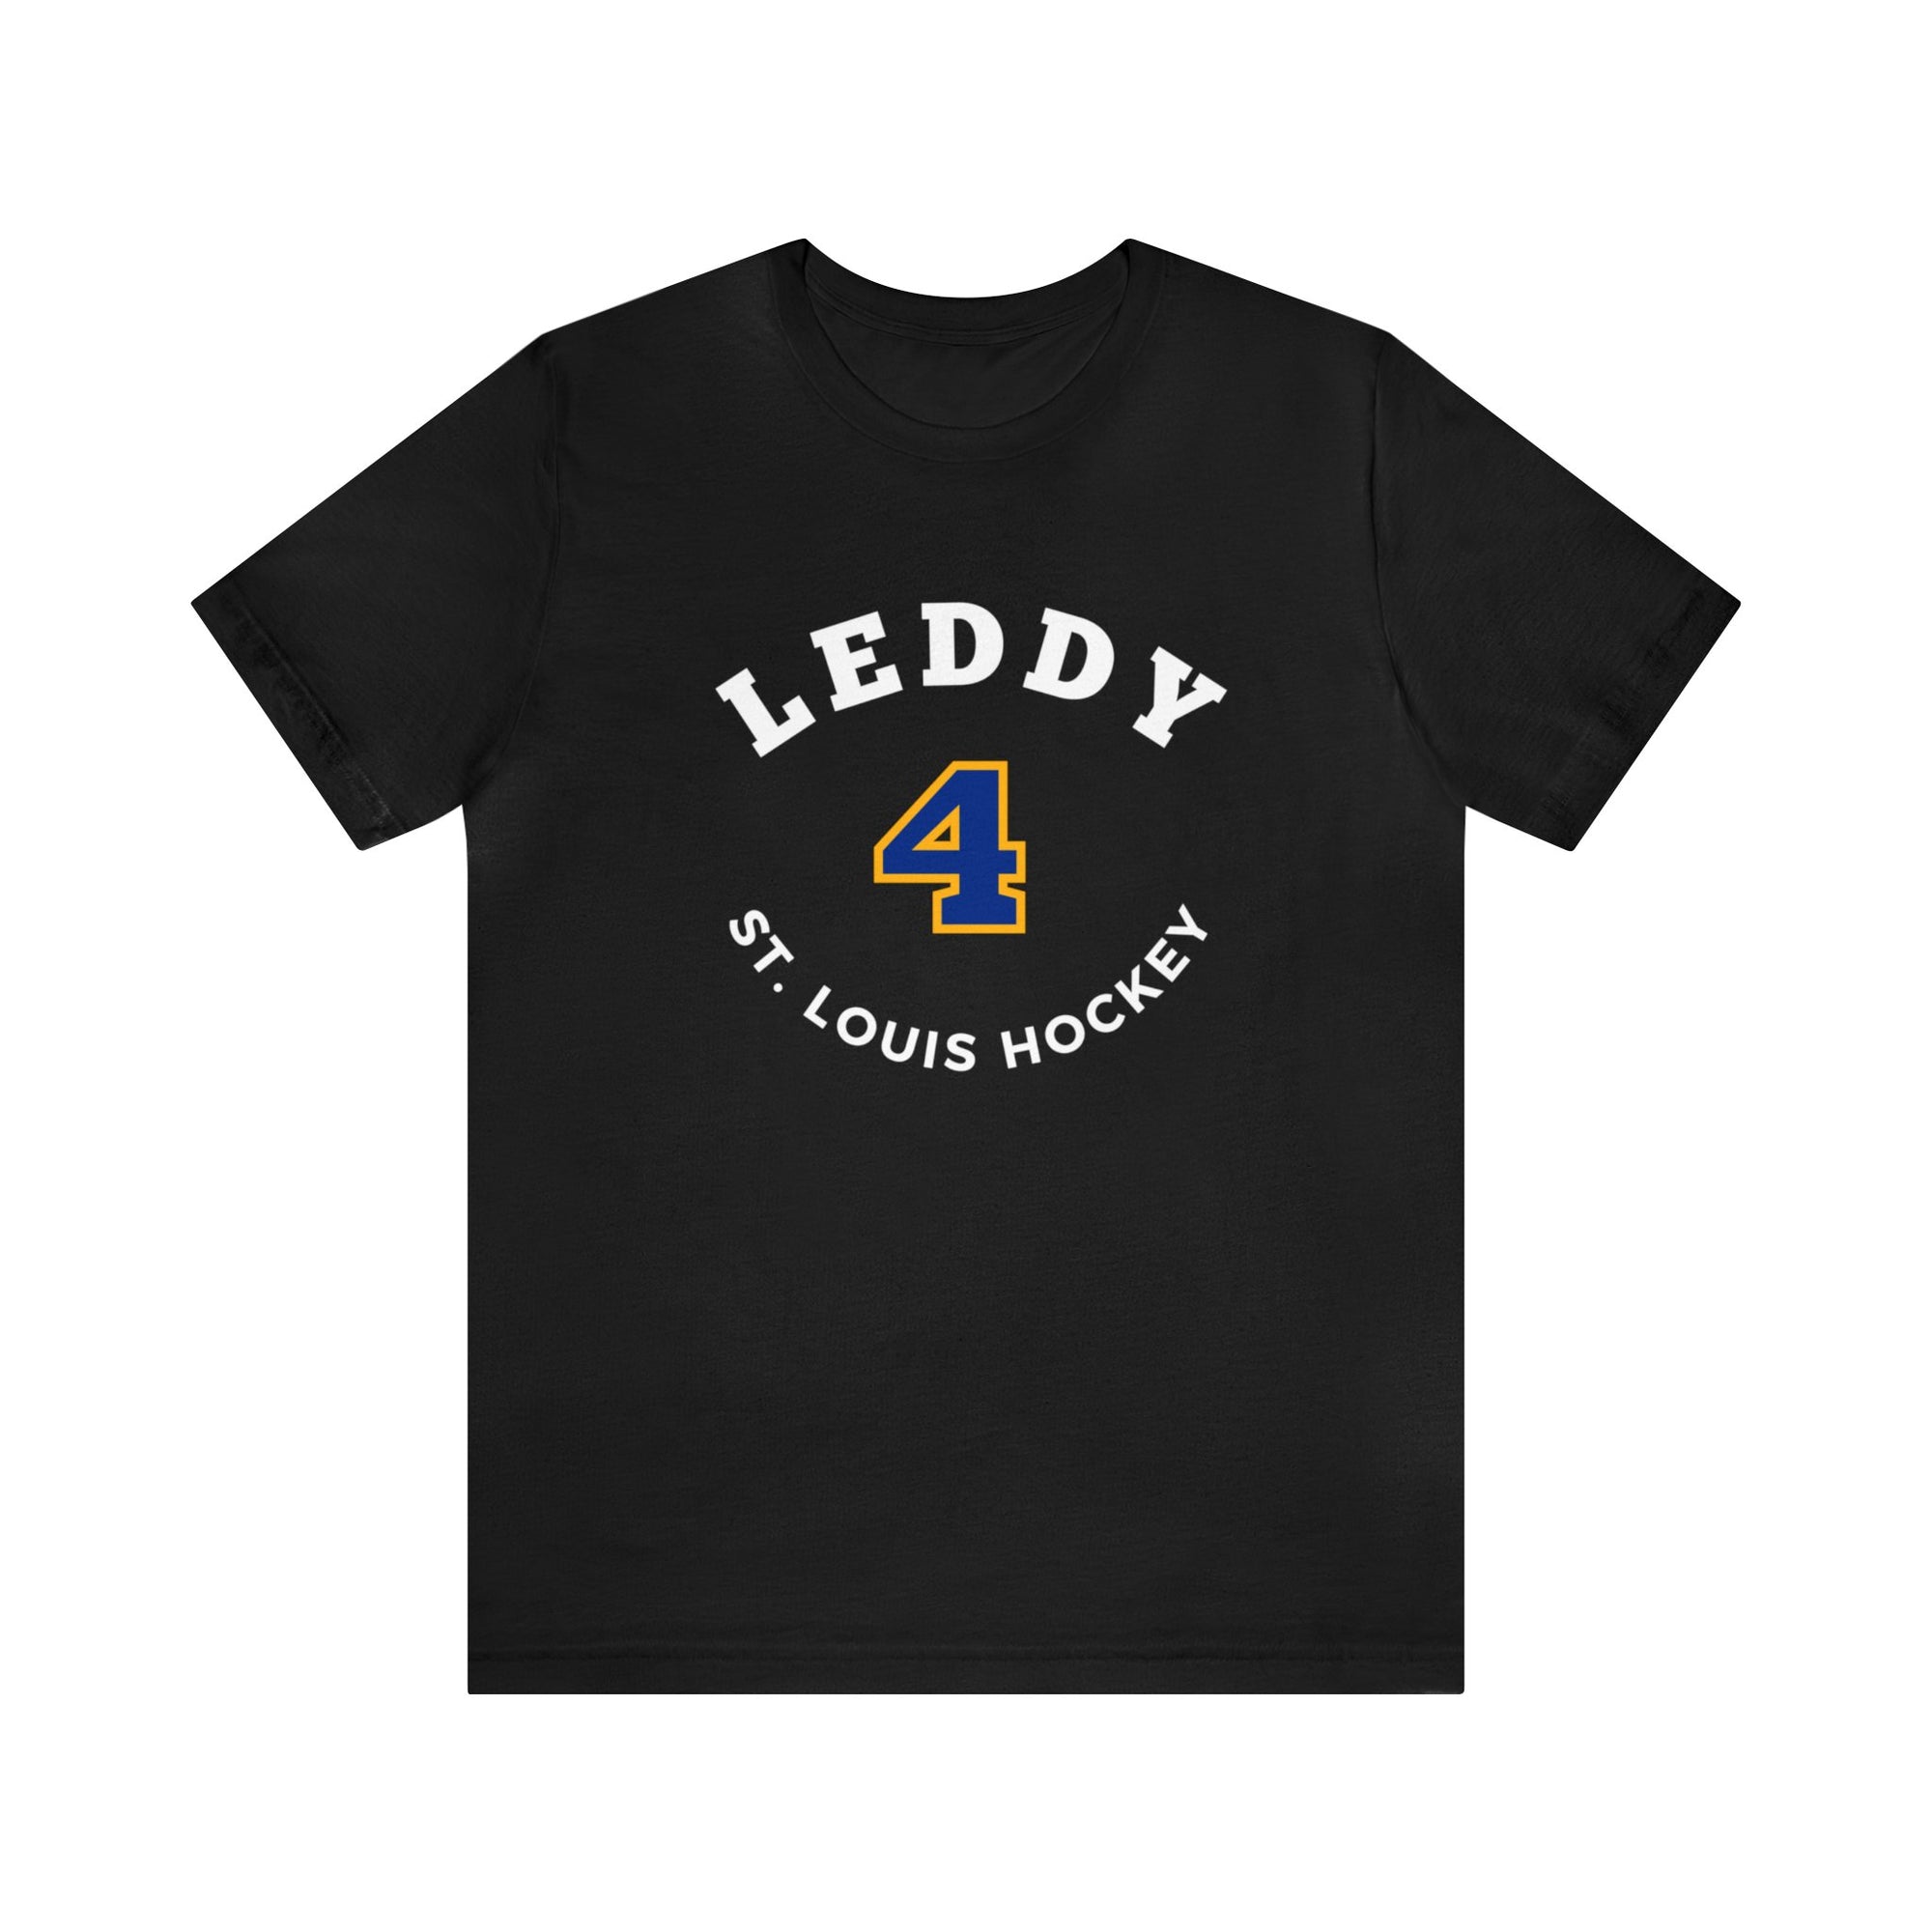 Leddy 4 St. Louis Hockey Number Arch Design Unisex T-Shirt